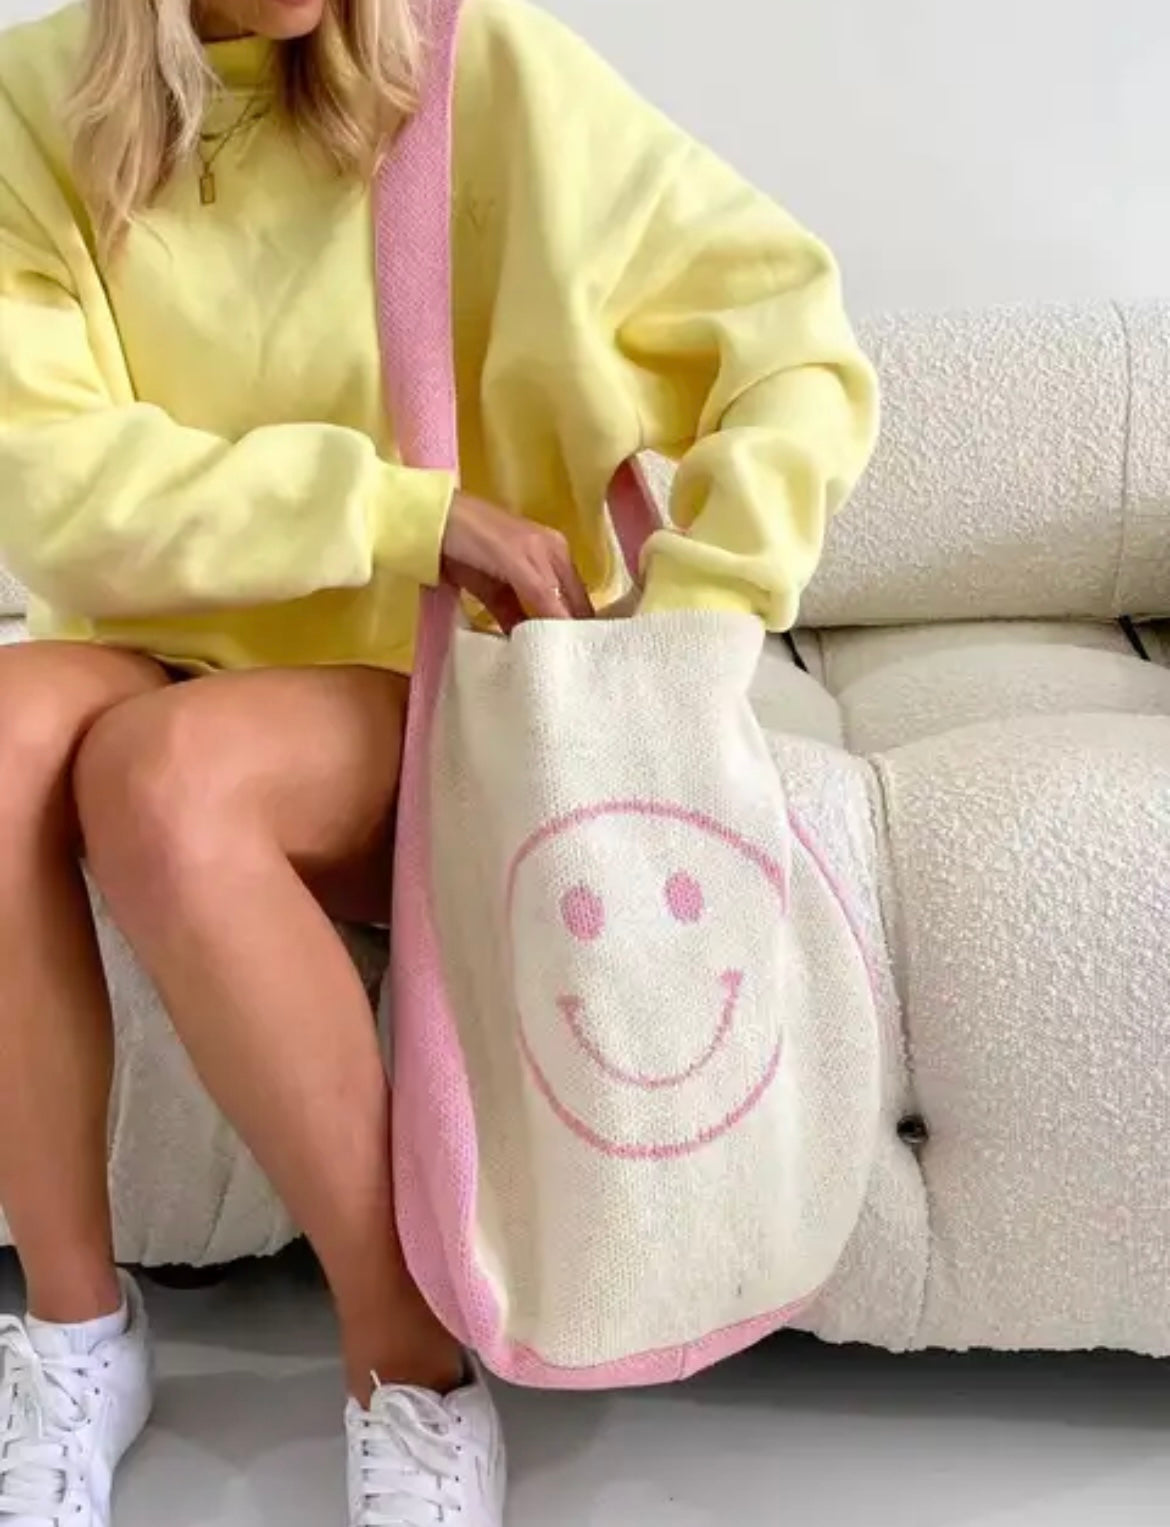 Retro Bright Smiley Face Canvas Tote, Aesthetic Tote Bag